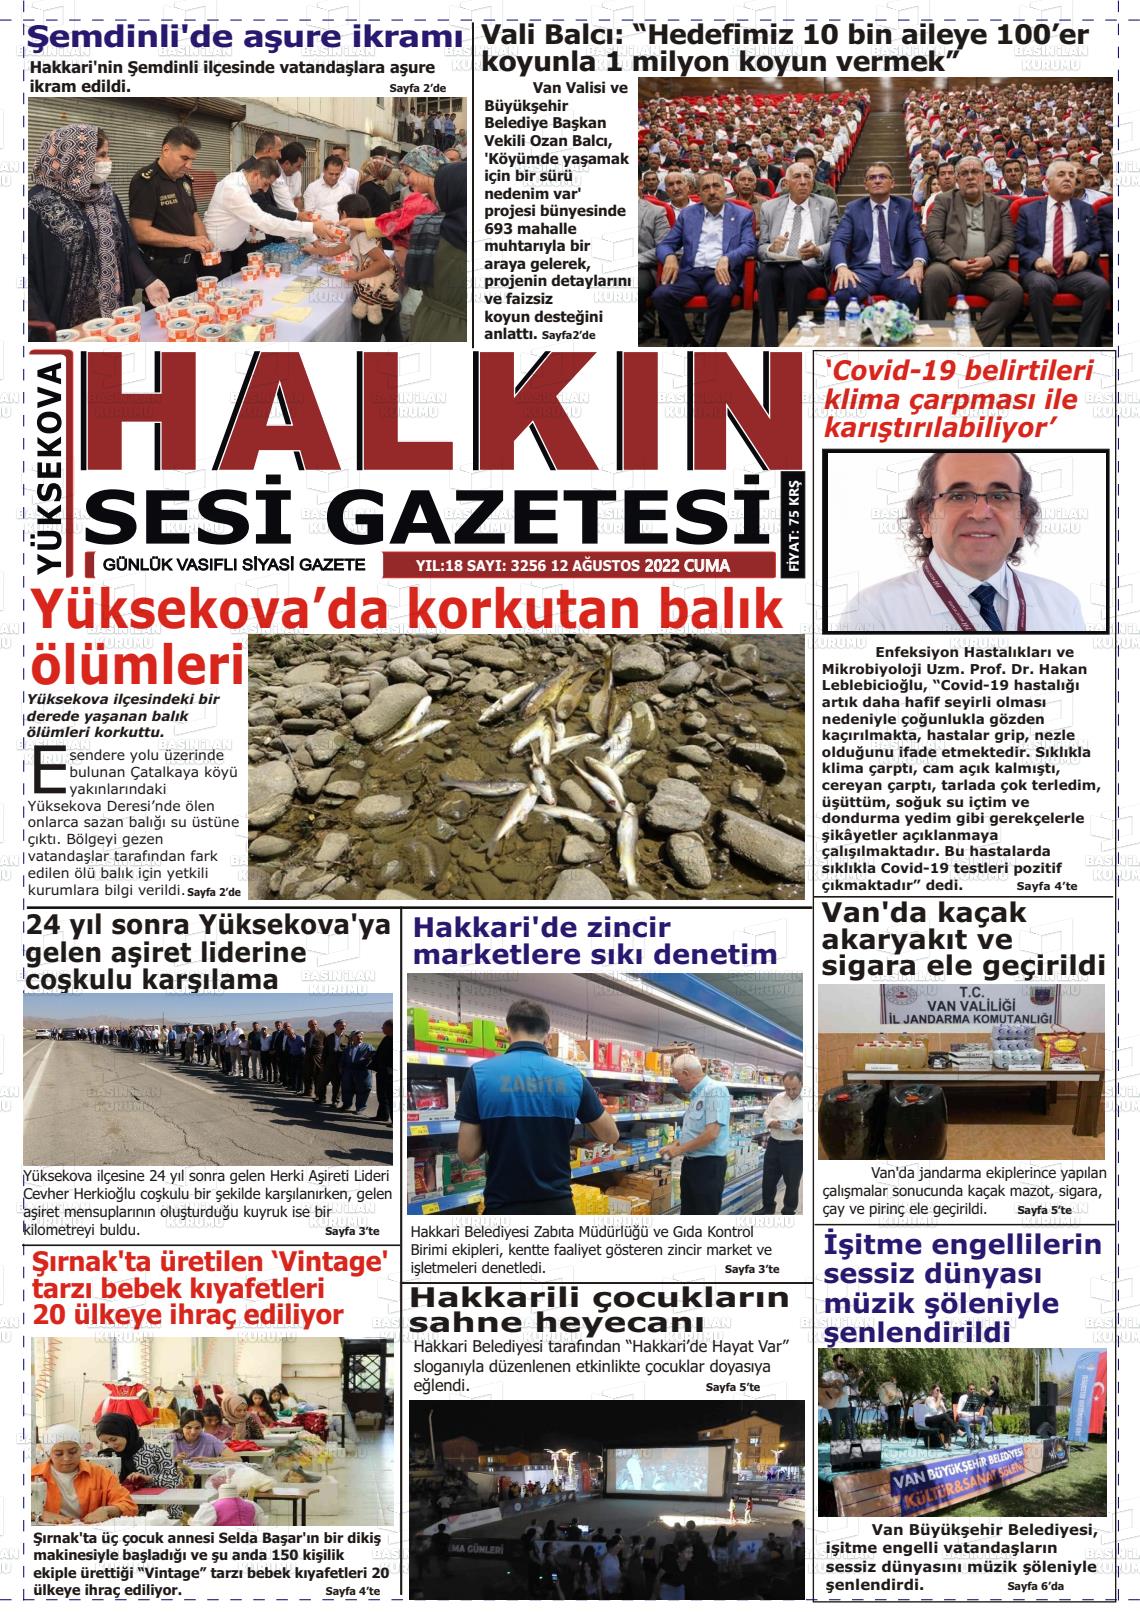 12 Ağustos 2022 Yüksekova Halkın Sesi Gazete Manşeti